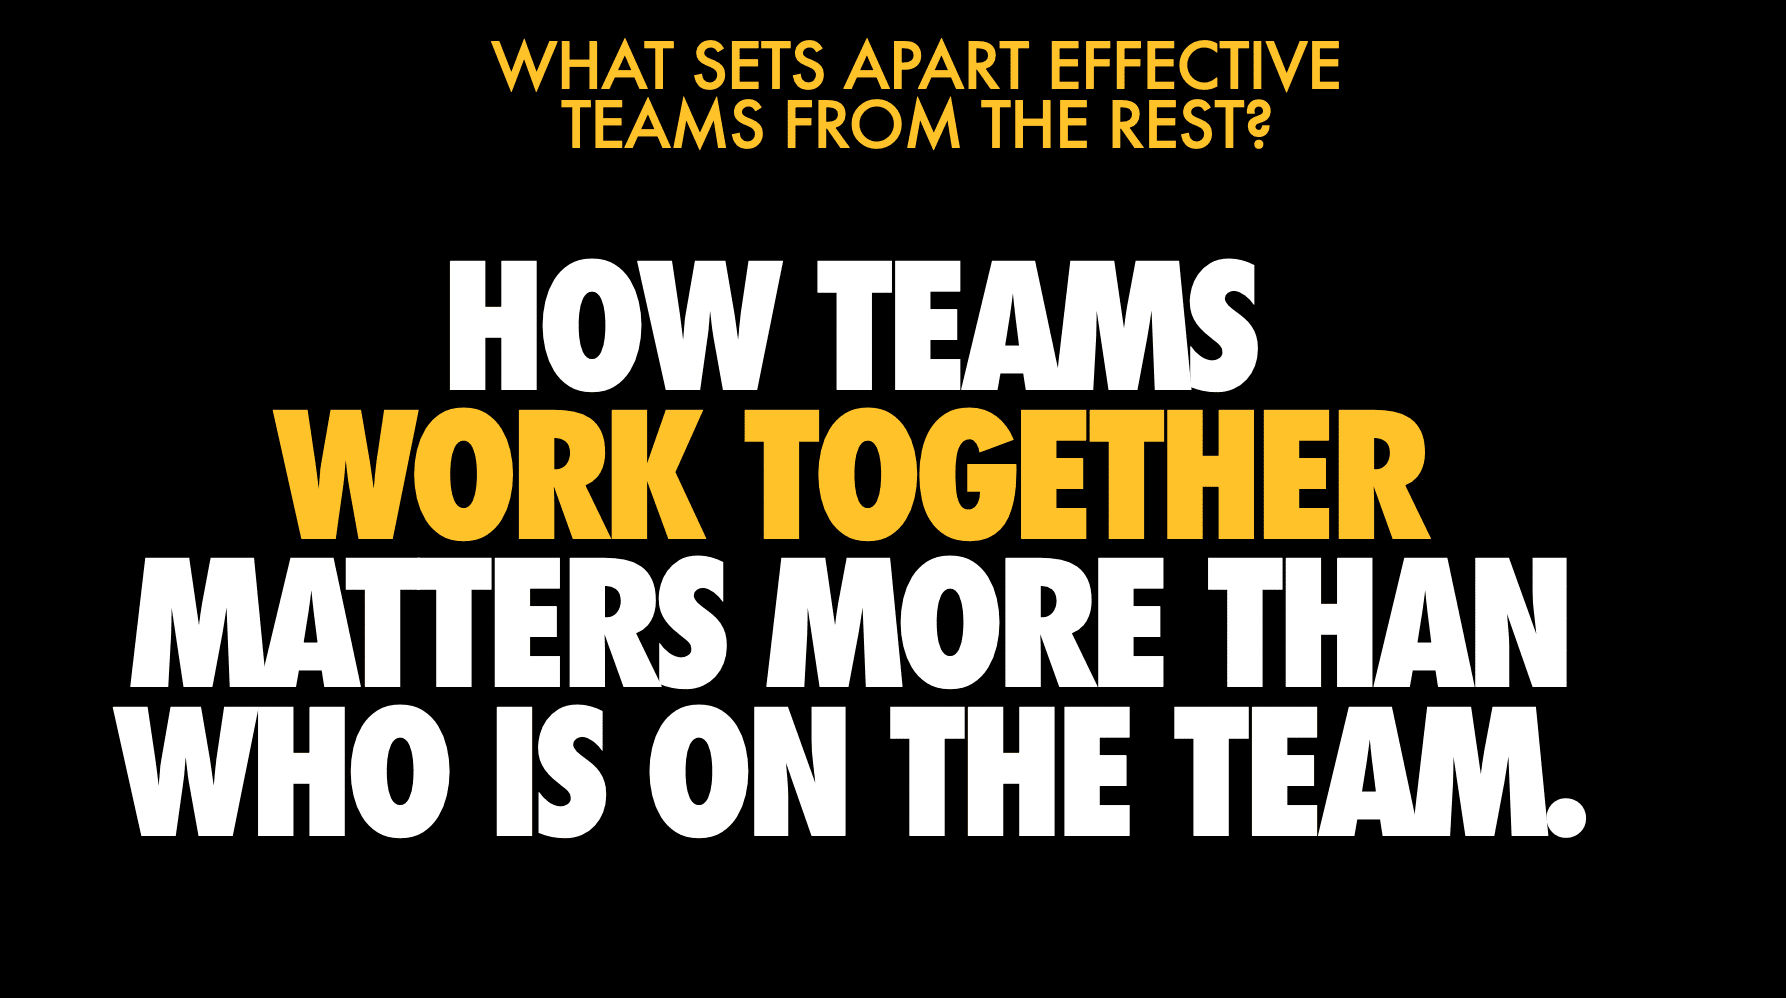 team effectiveness